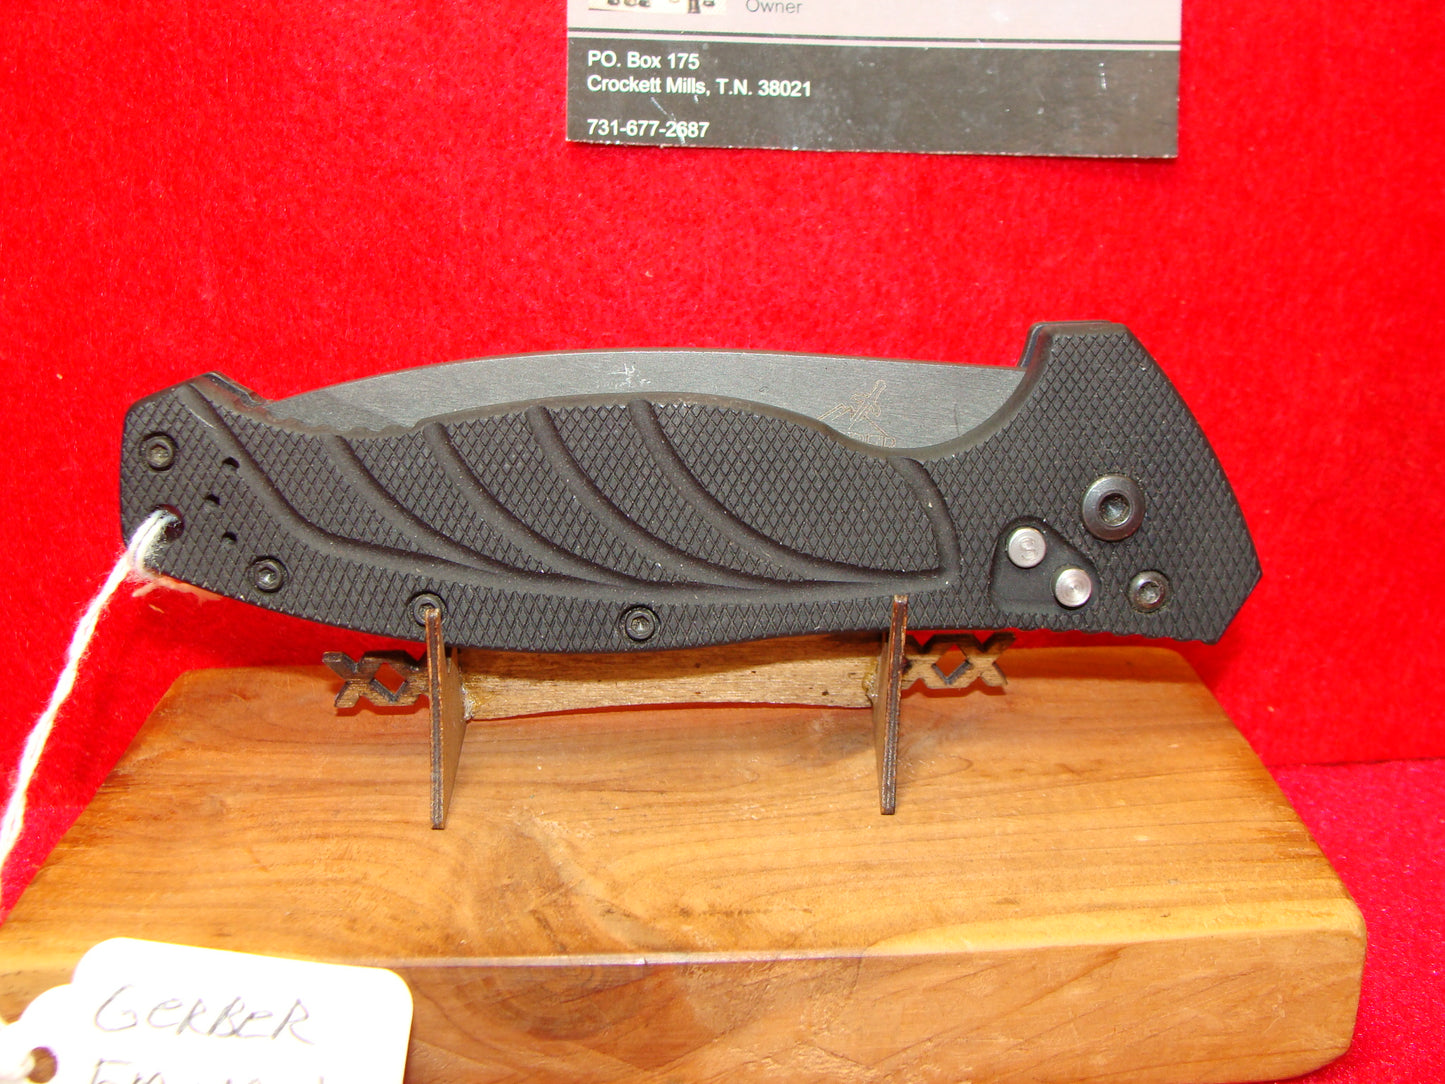 GERBER EMERSON DESIGN USA 1990-98 TACTICAL AUTOMATIC KNIFE 6061-T6 ALUMINUM HANDLES